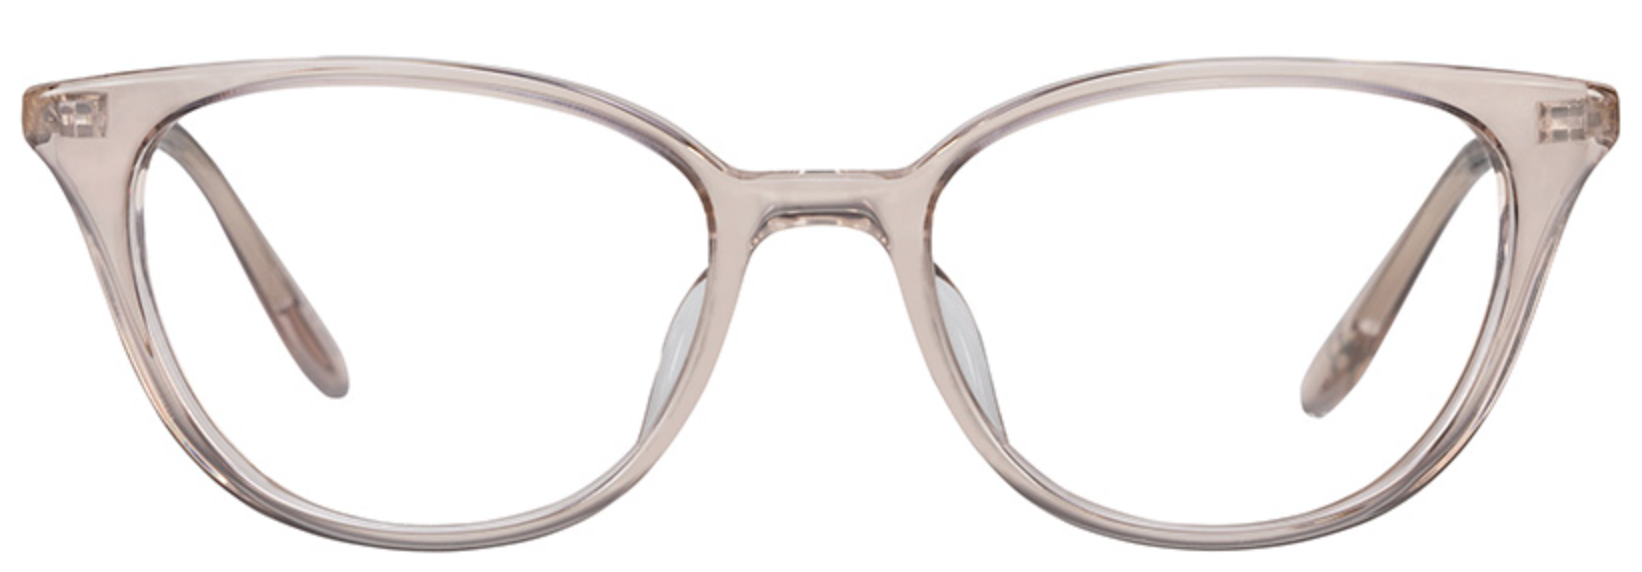 Alexander Daas - Barton Perreira Elise Eyeglasses - Hush - Front View